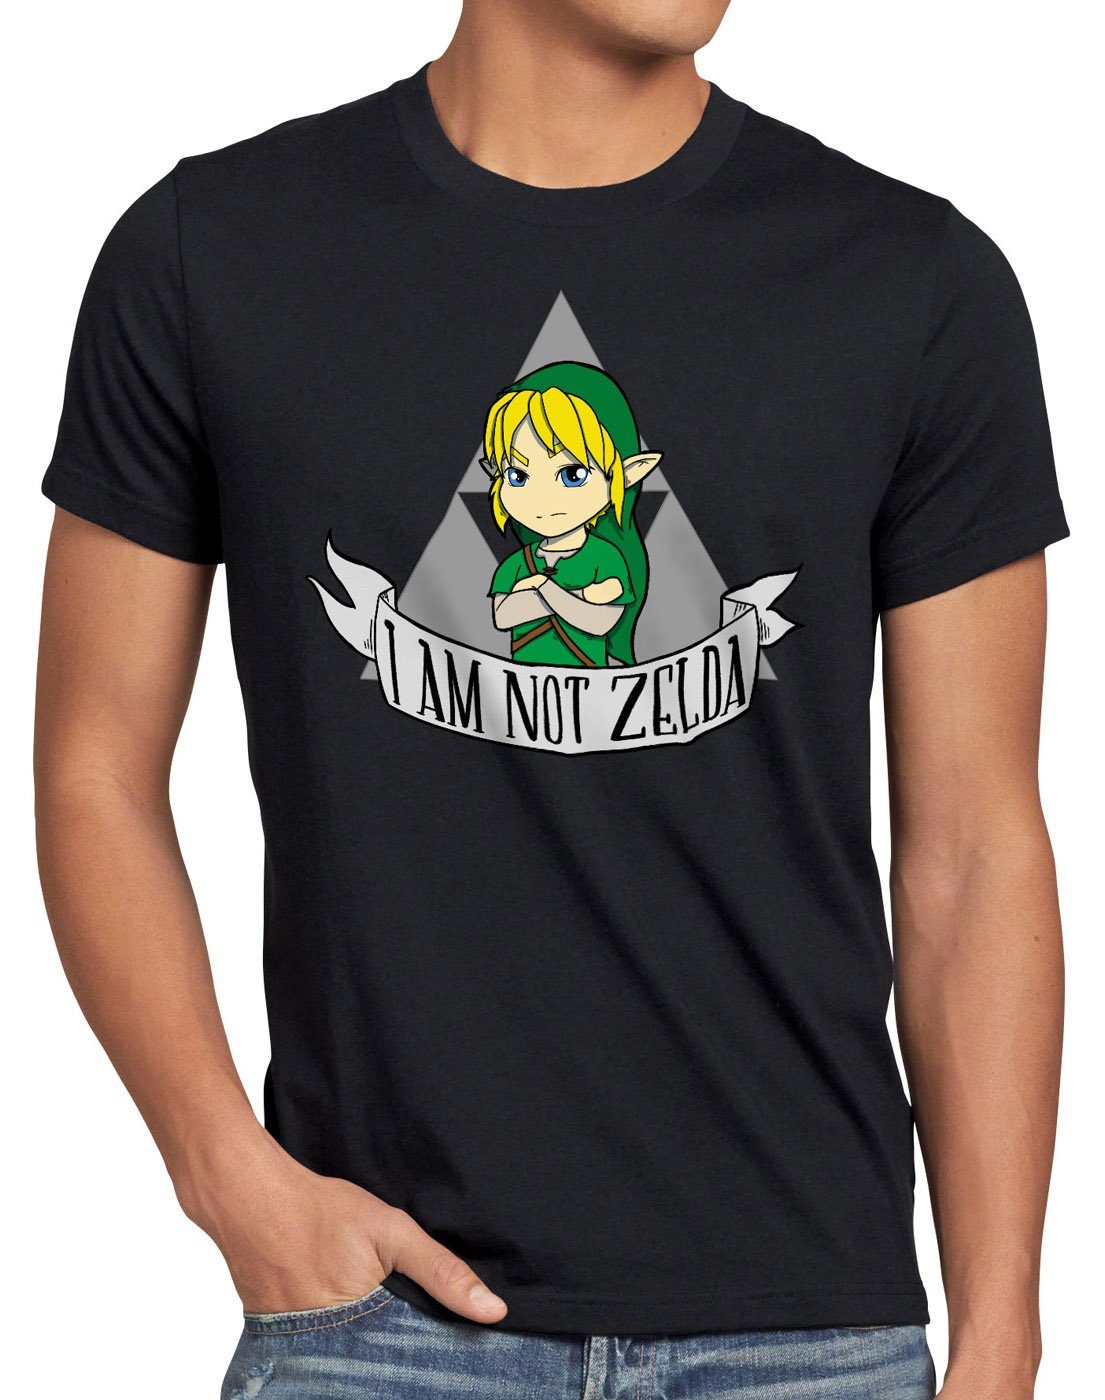 Print-Shirt gamer Herren hyrule Zelda am style3 I not link schwarz T-Shirt